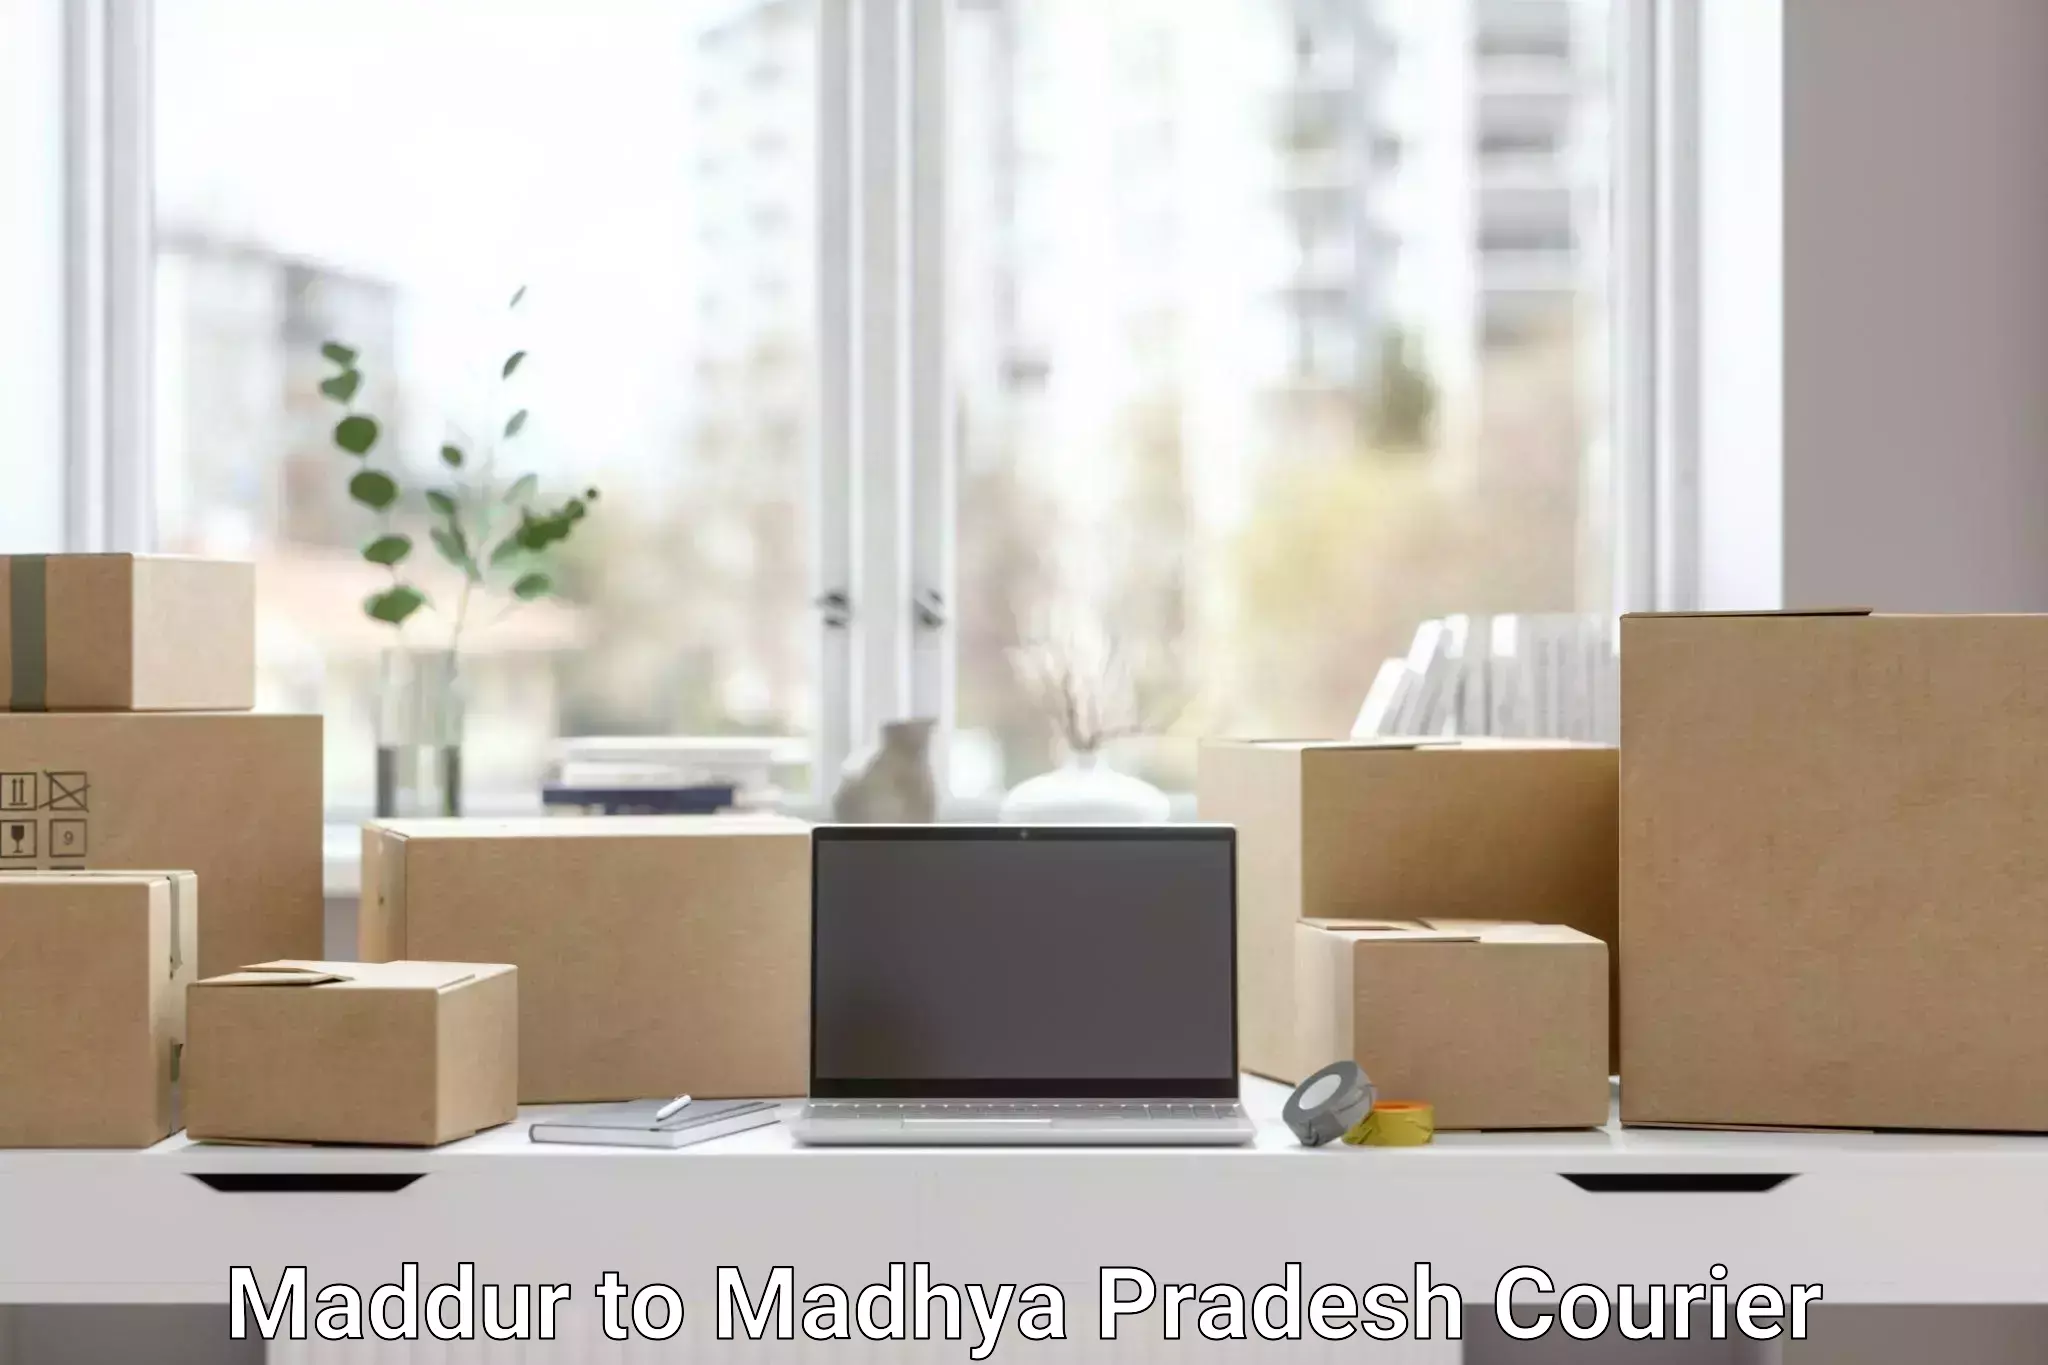 Express package handling Maddur to Madhya Pradesh